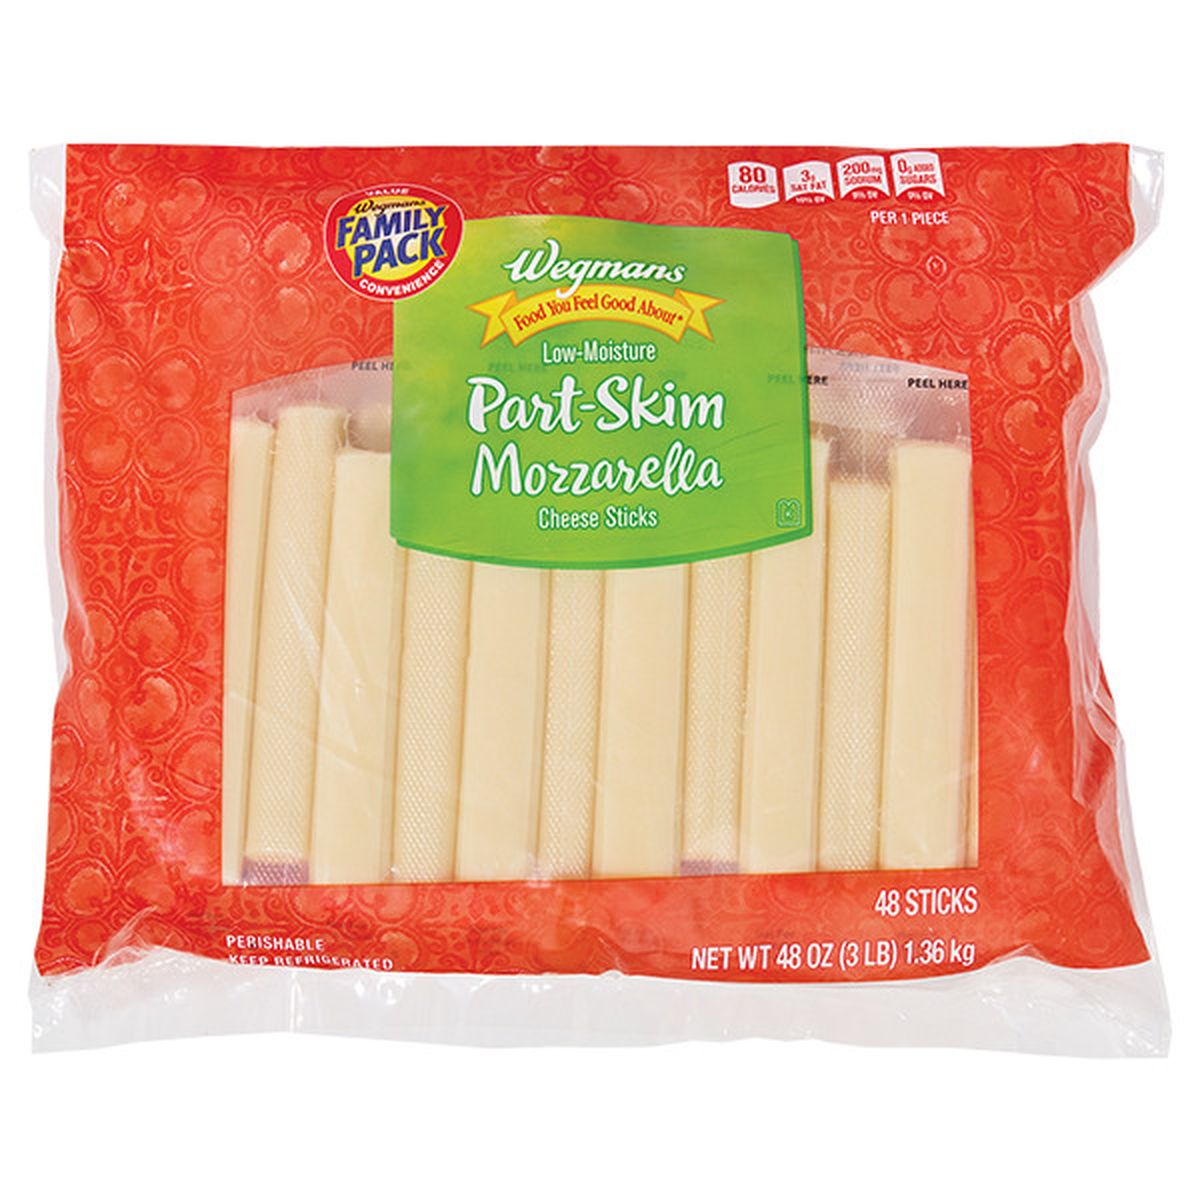 Calories in Wegmans Part-Skim Mozzarella Cheese Sticks, 48 Count, FAMILY PACK